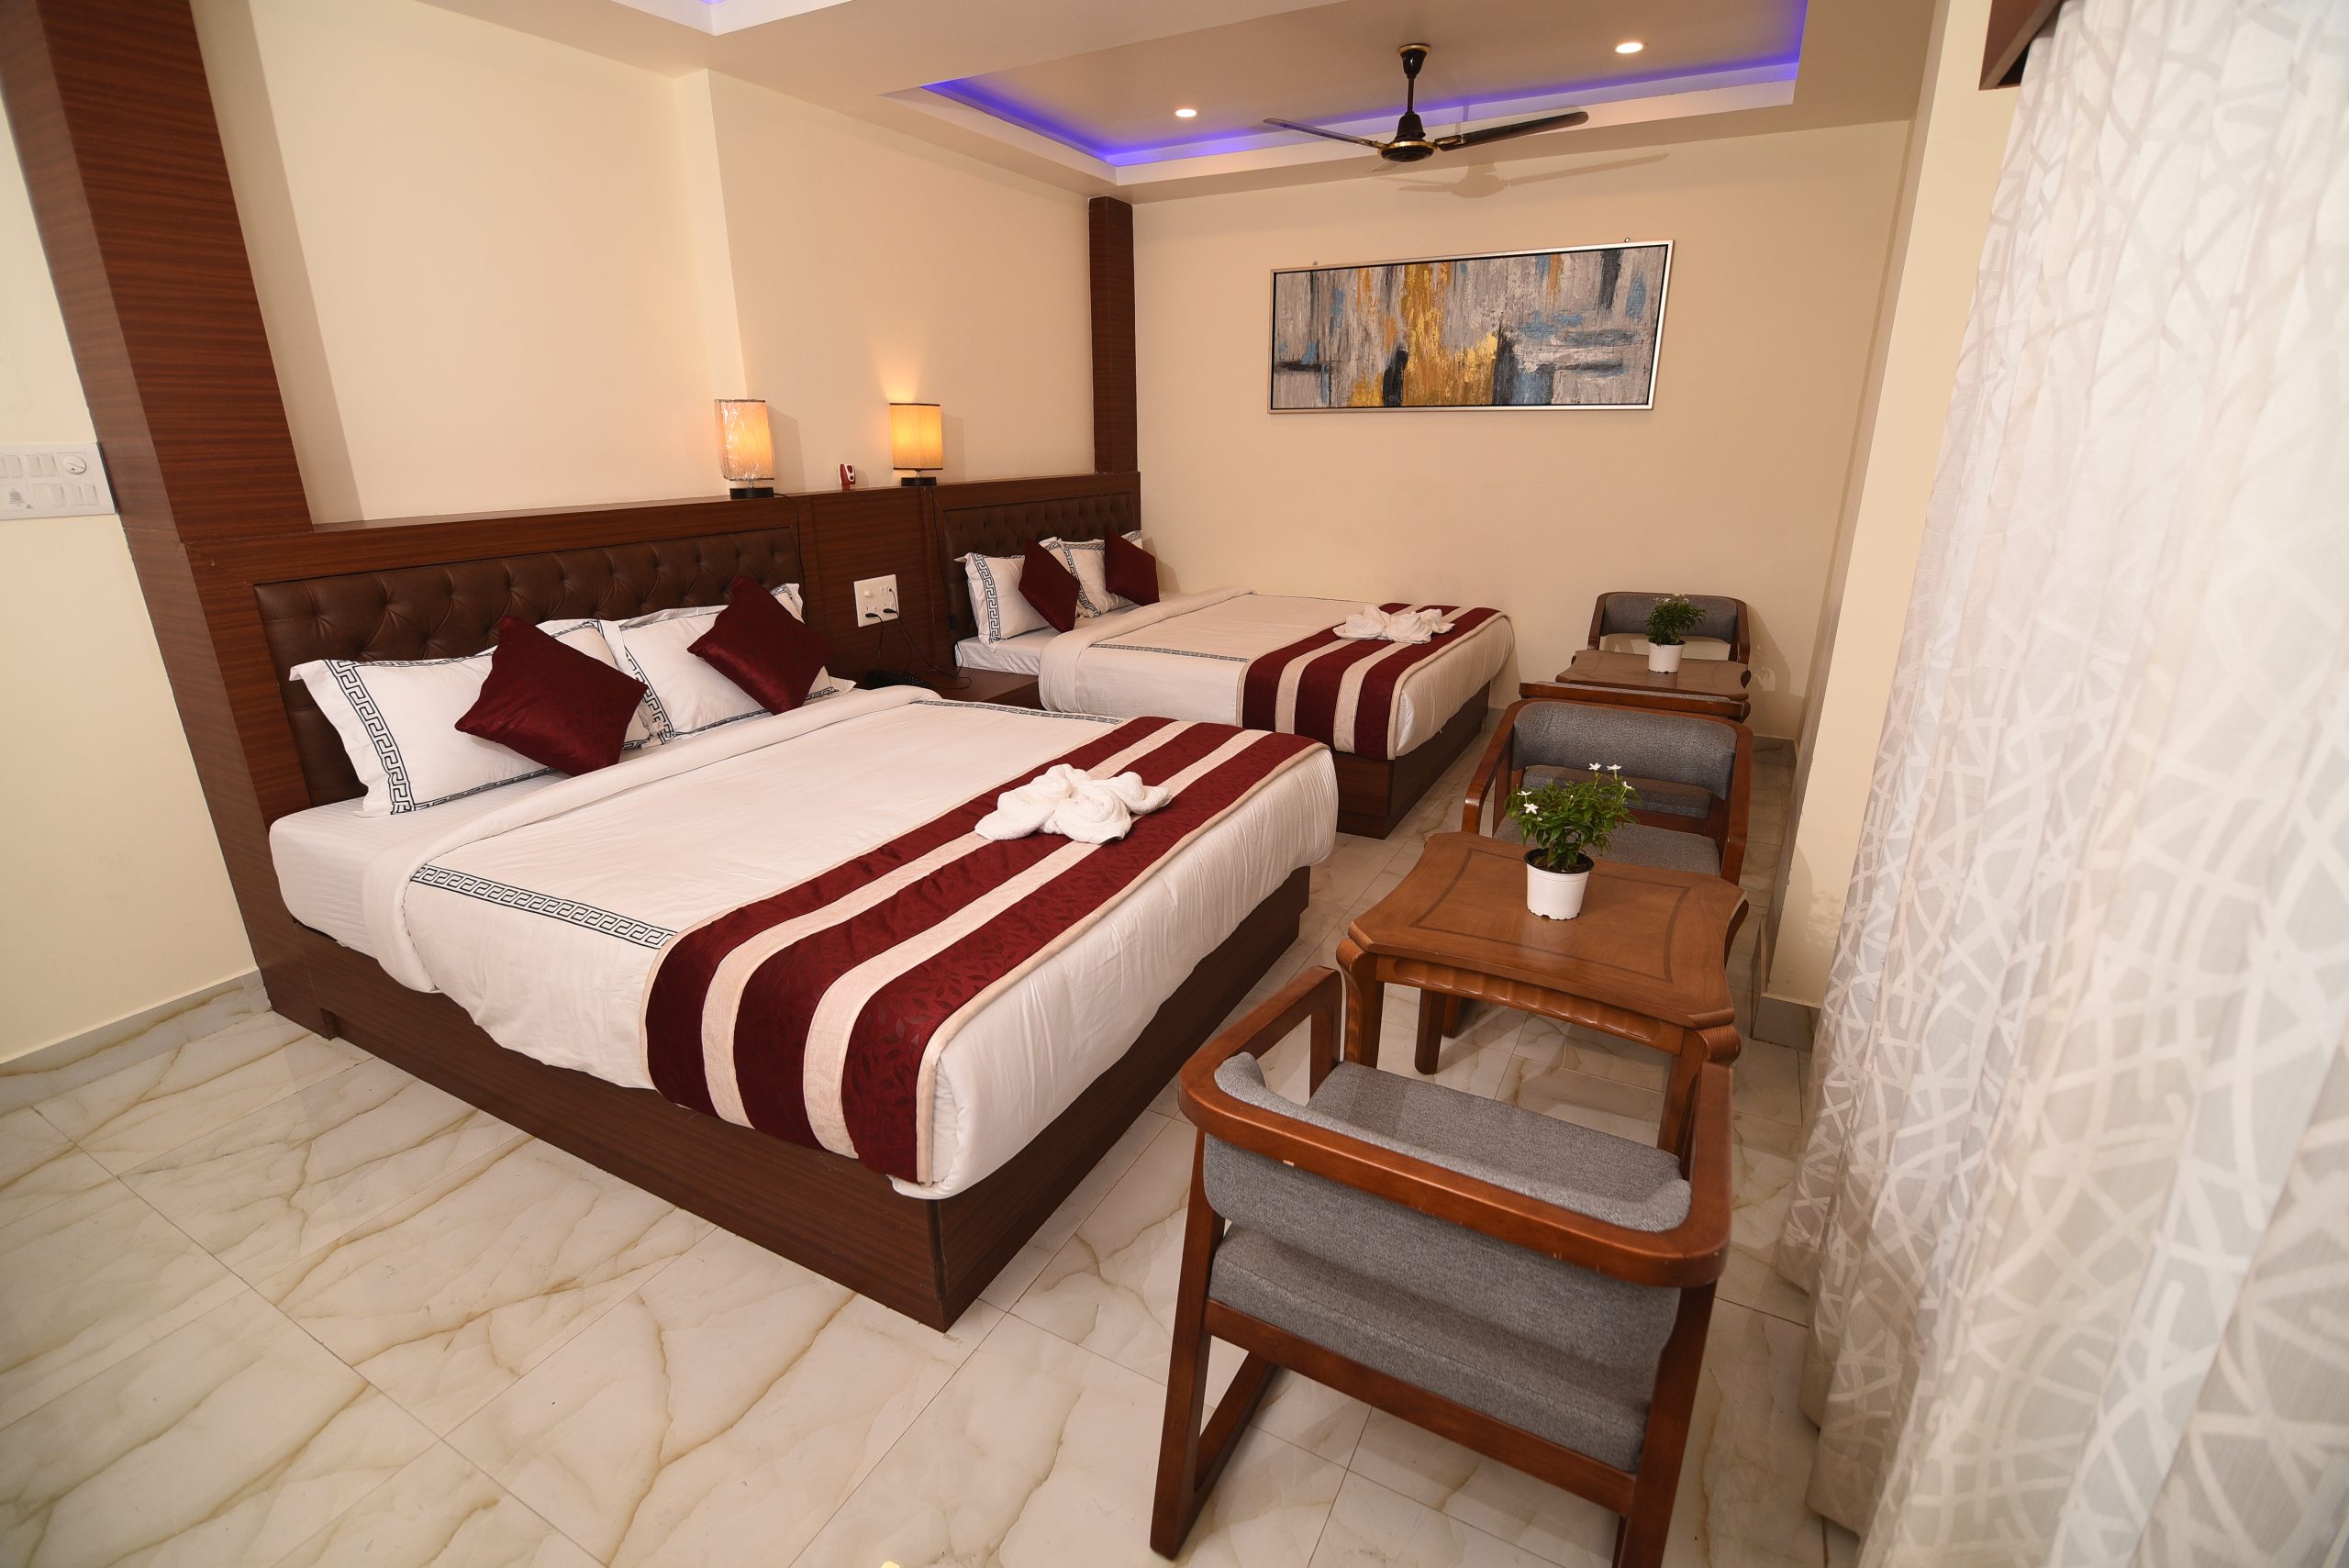 hotels at anadaman and nicobar islands - family room